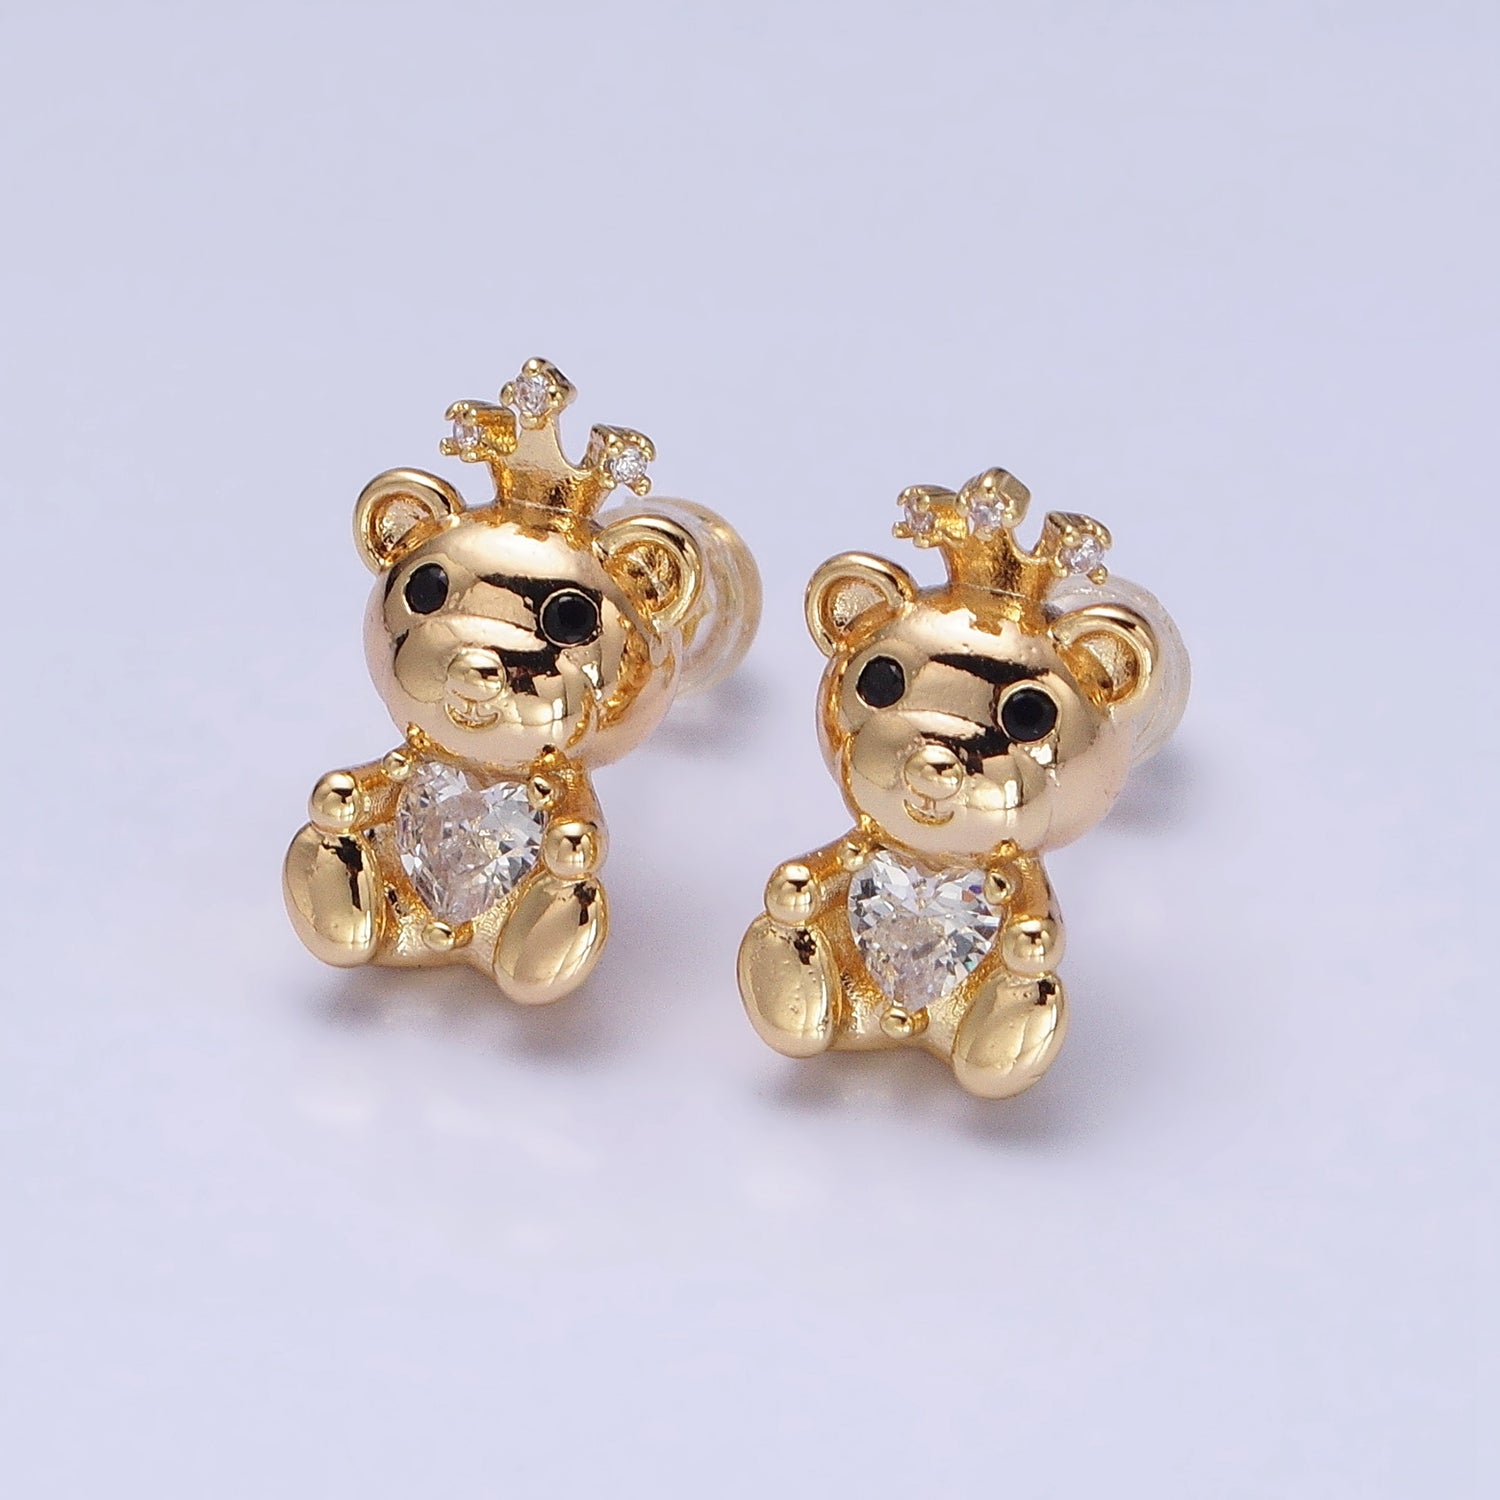 16K Gold Filled Crowned King Teddy Bear Clear CZ Heart Stud Earrings | AD822 - DLUXCA